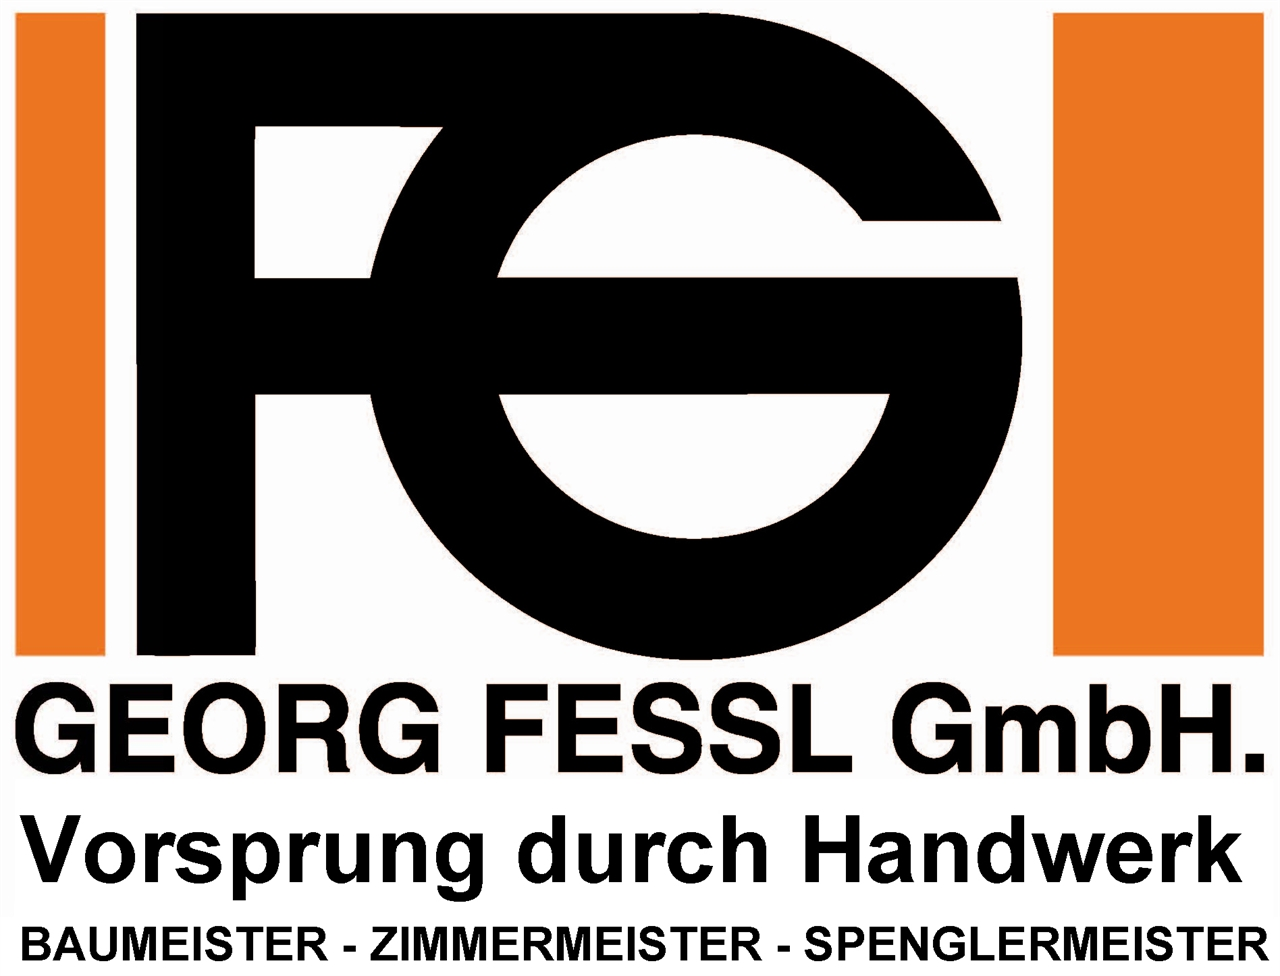 Georg Fessl GmbH